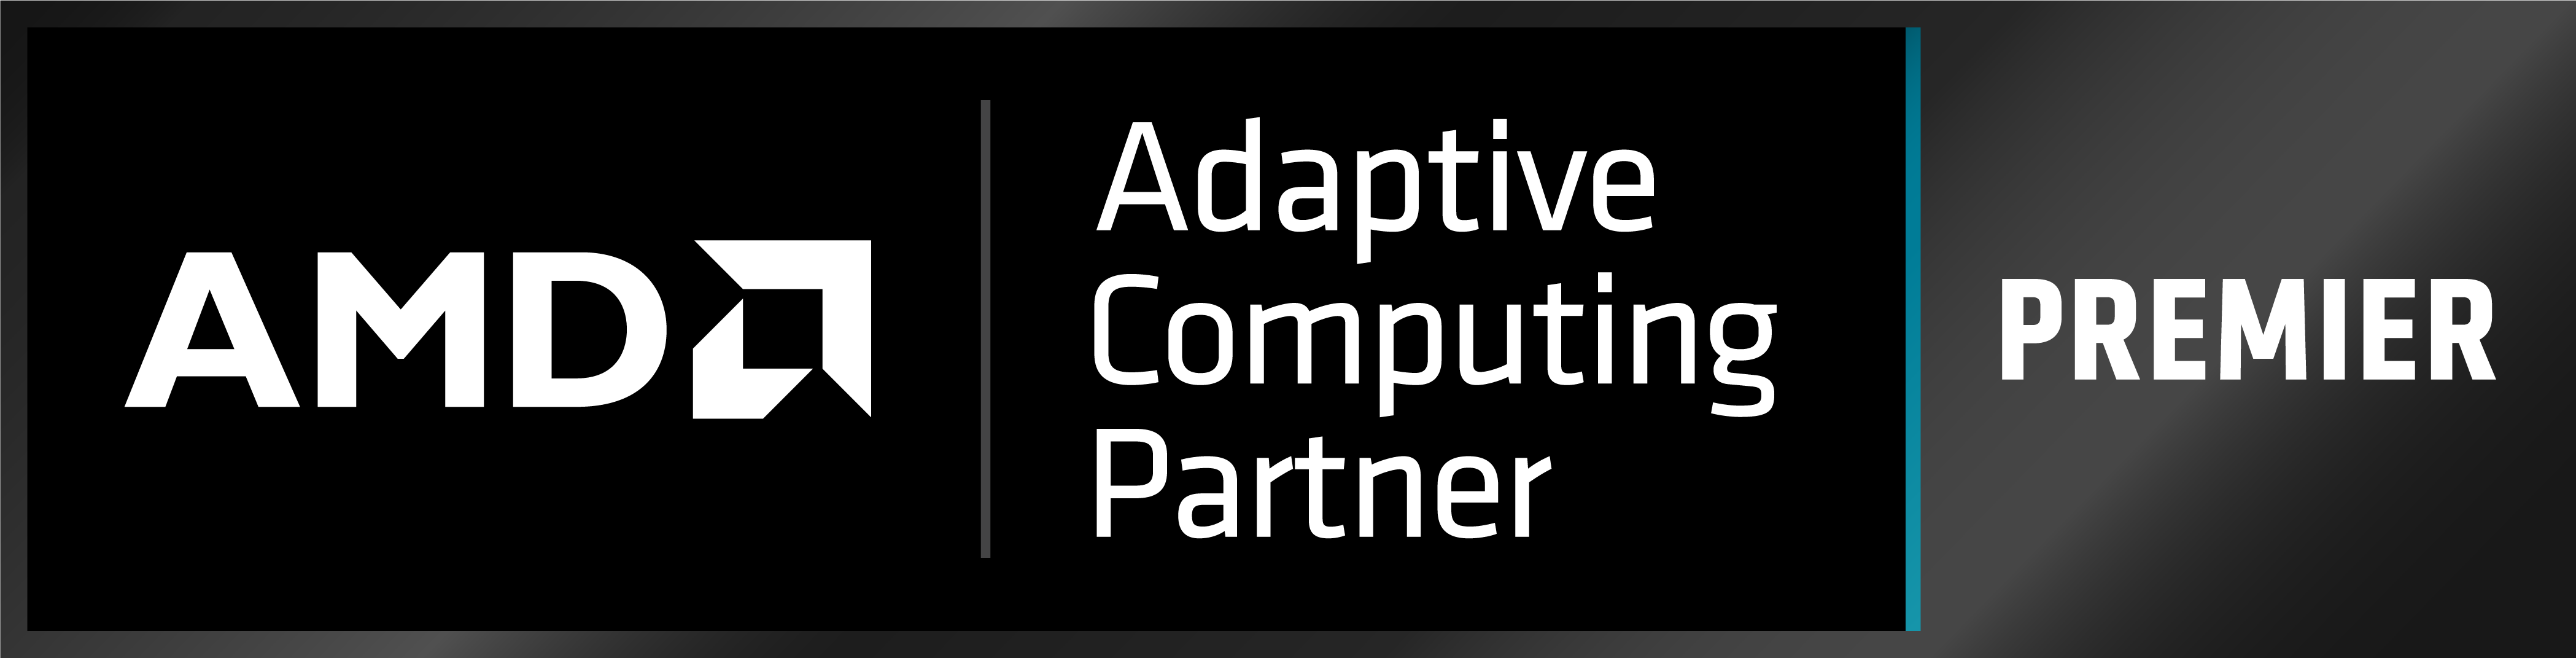 AMD Adaptive Computing Partner Premier Logo